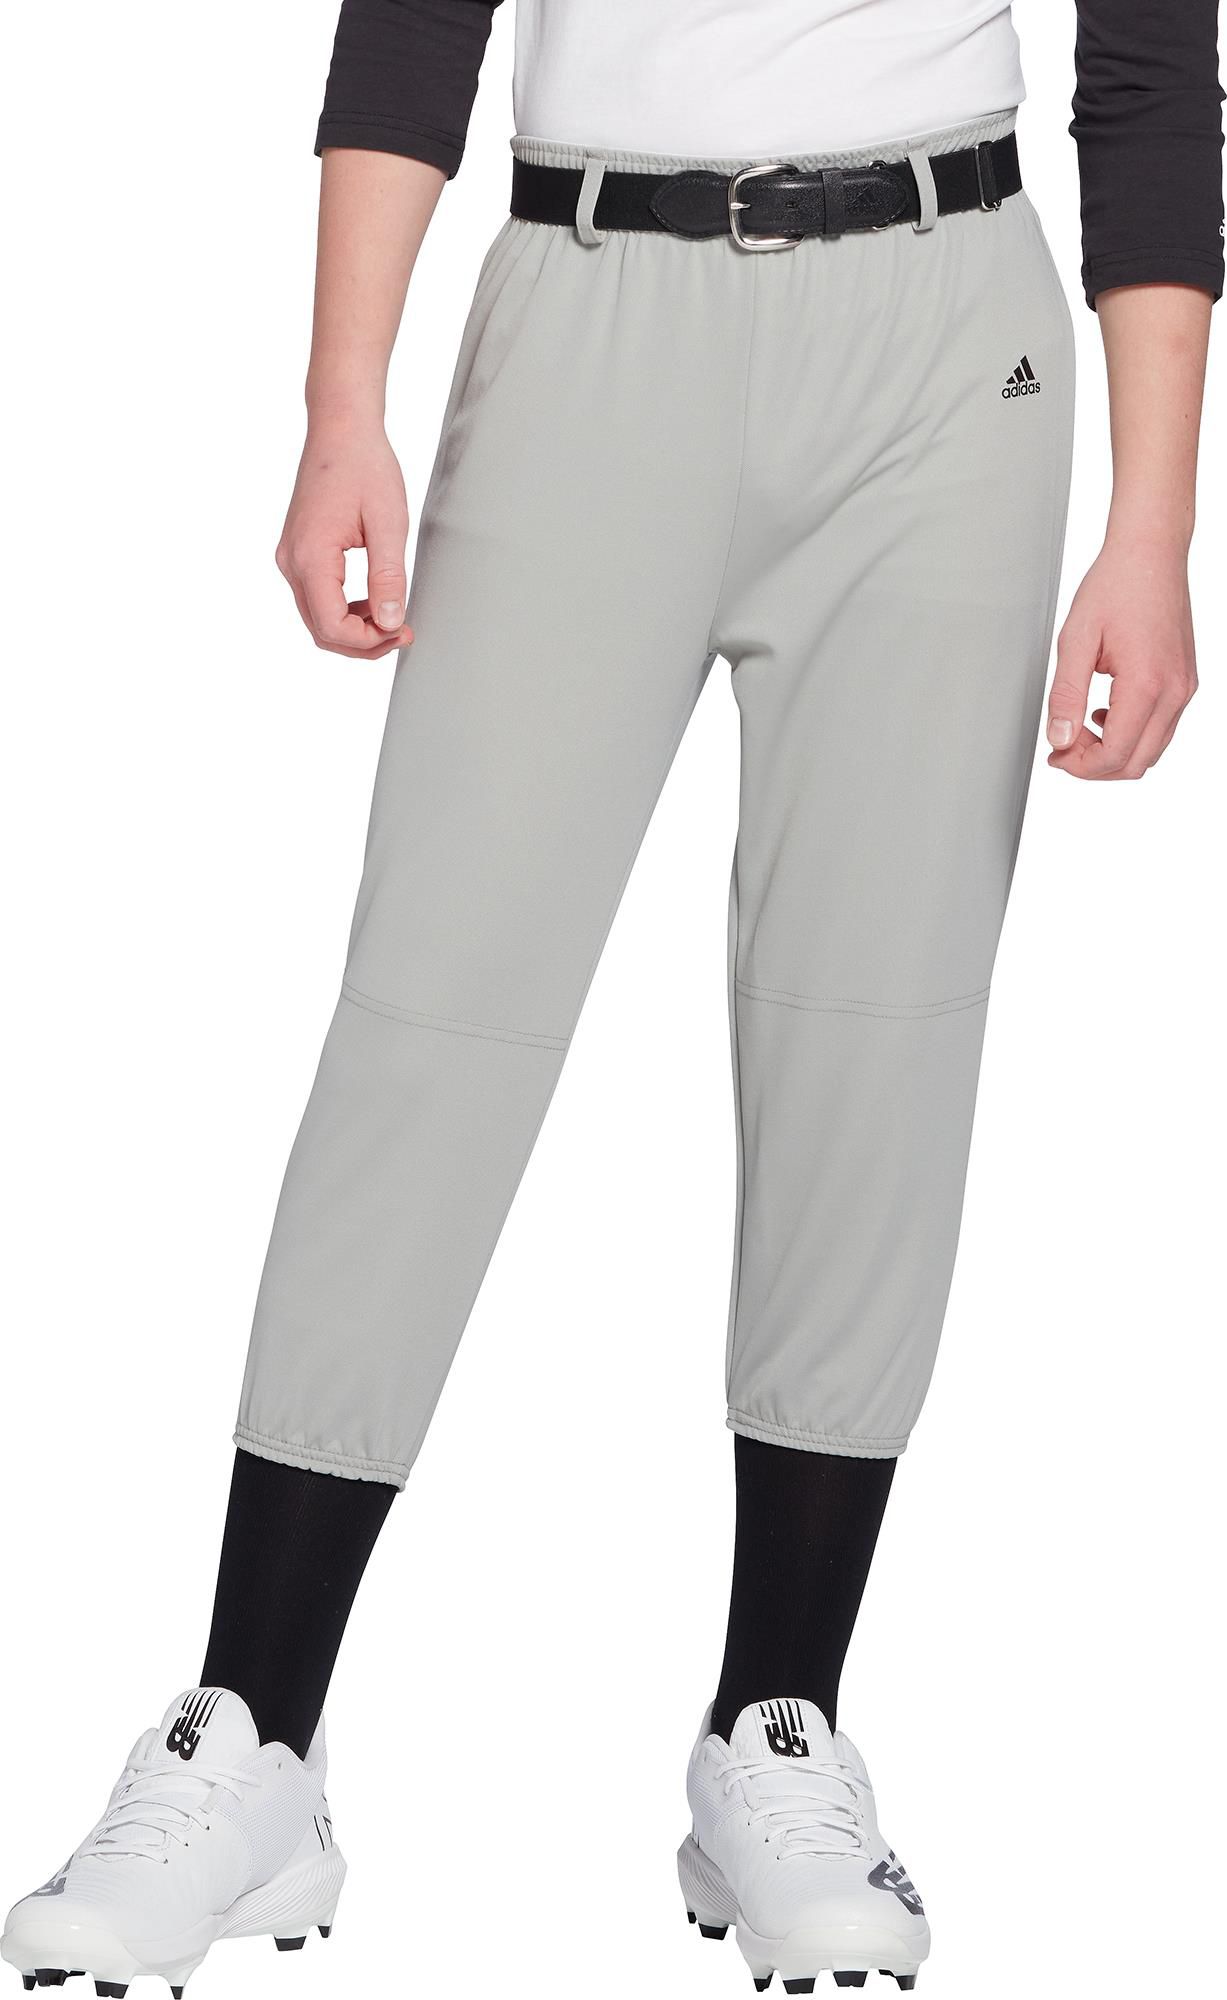 adidas Baseball Pants | Best Price Guarantee at DICK'S